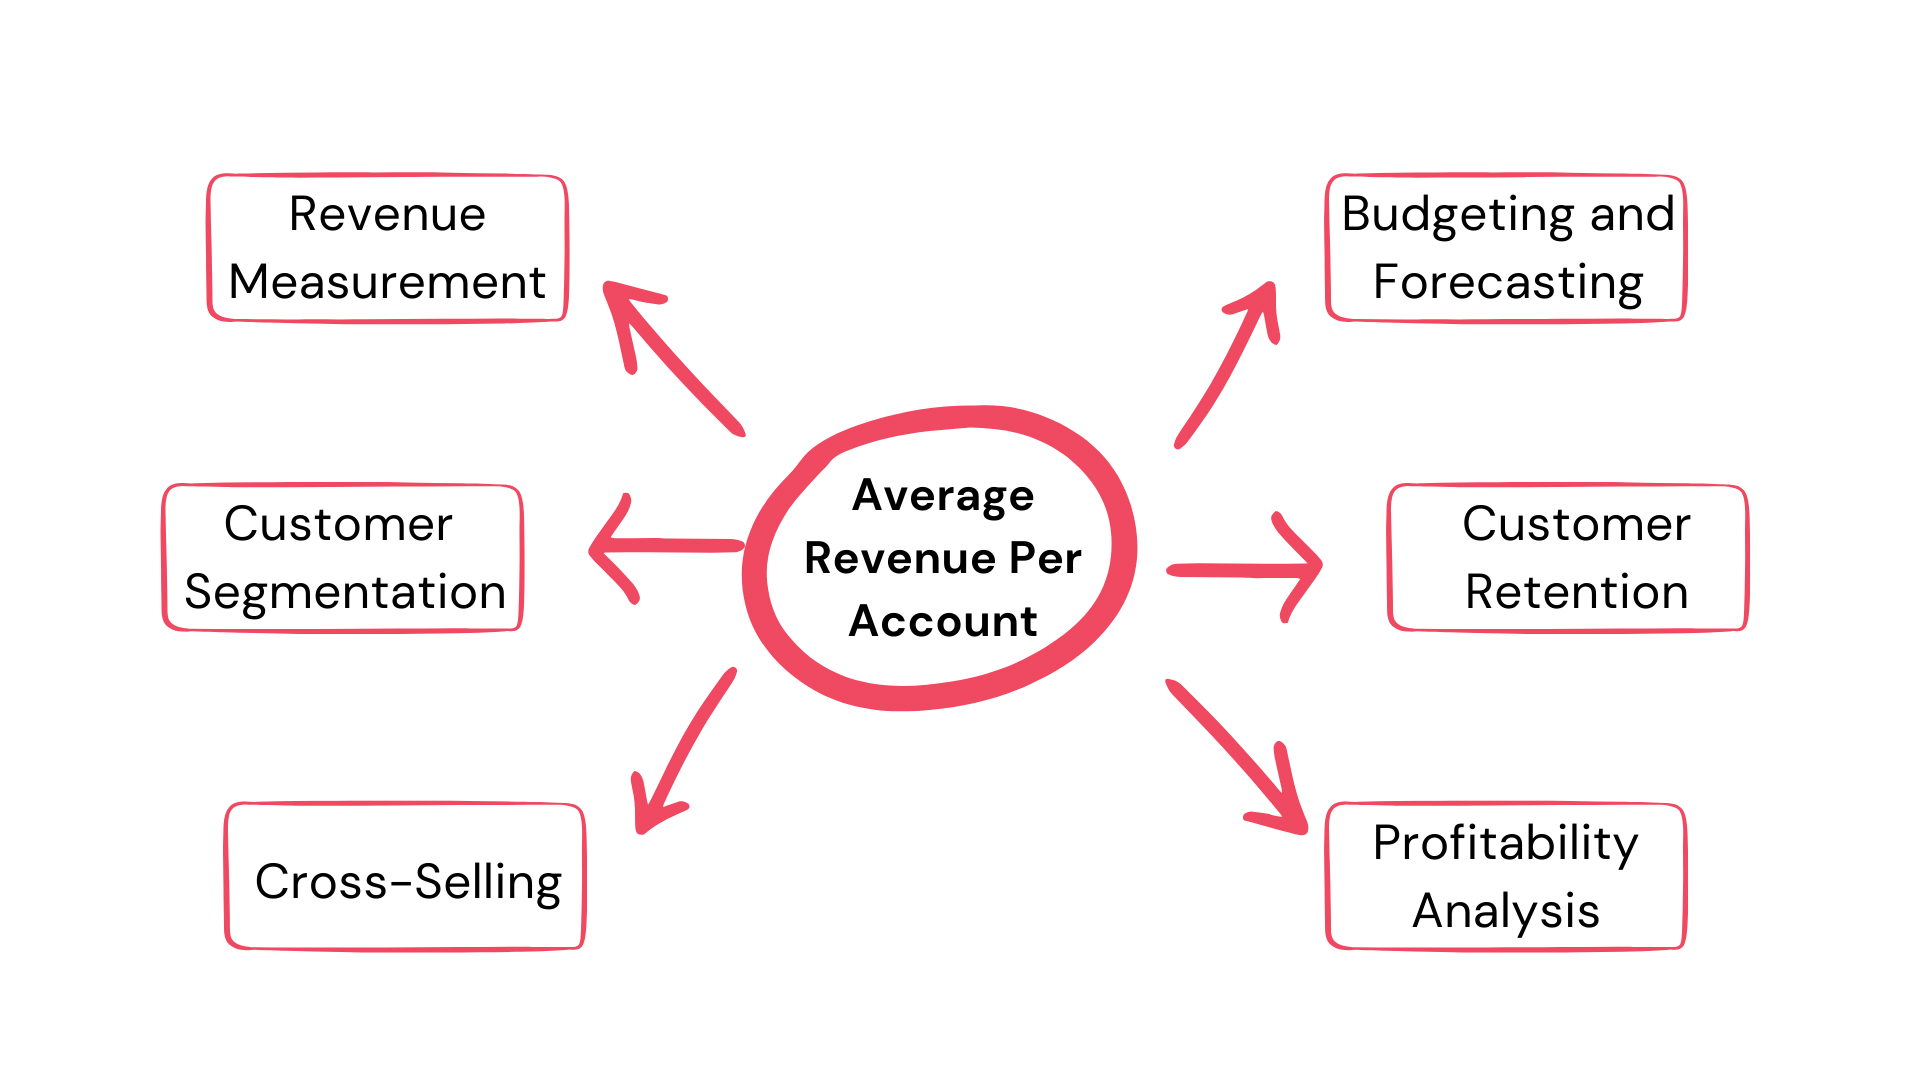 Average Revenue Per Account